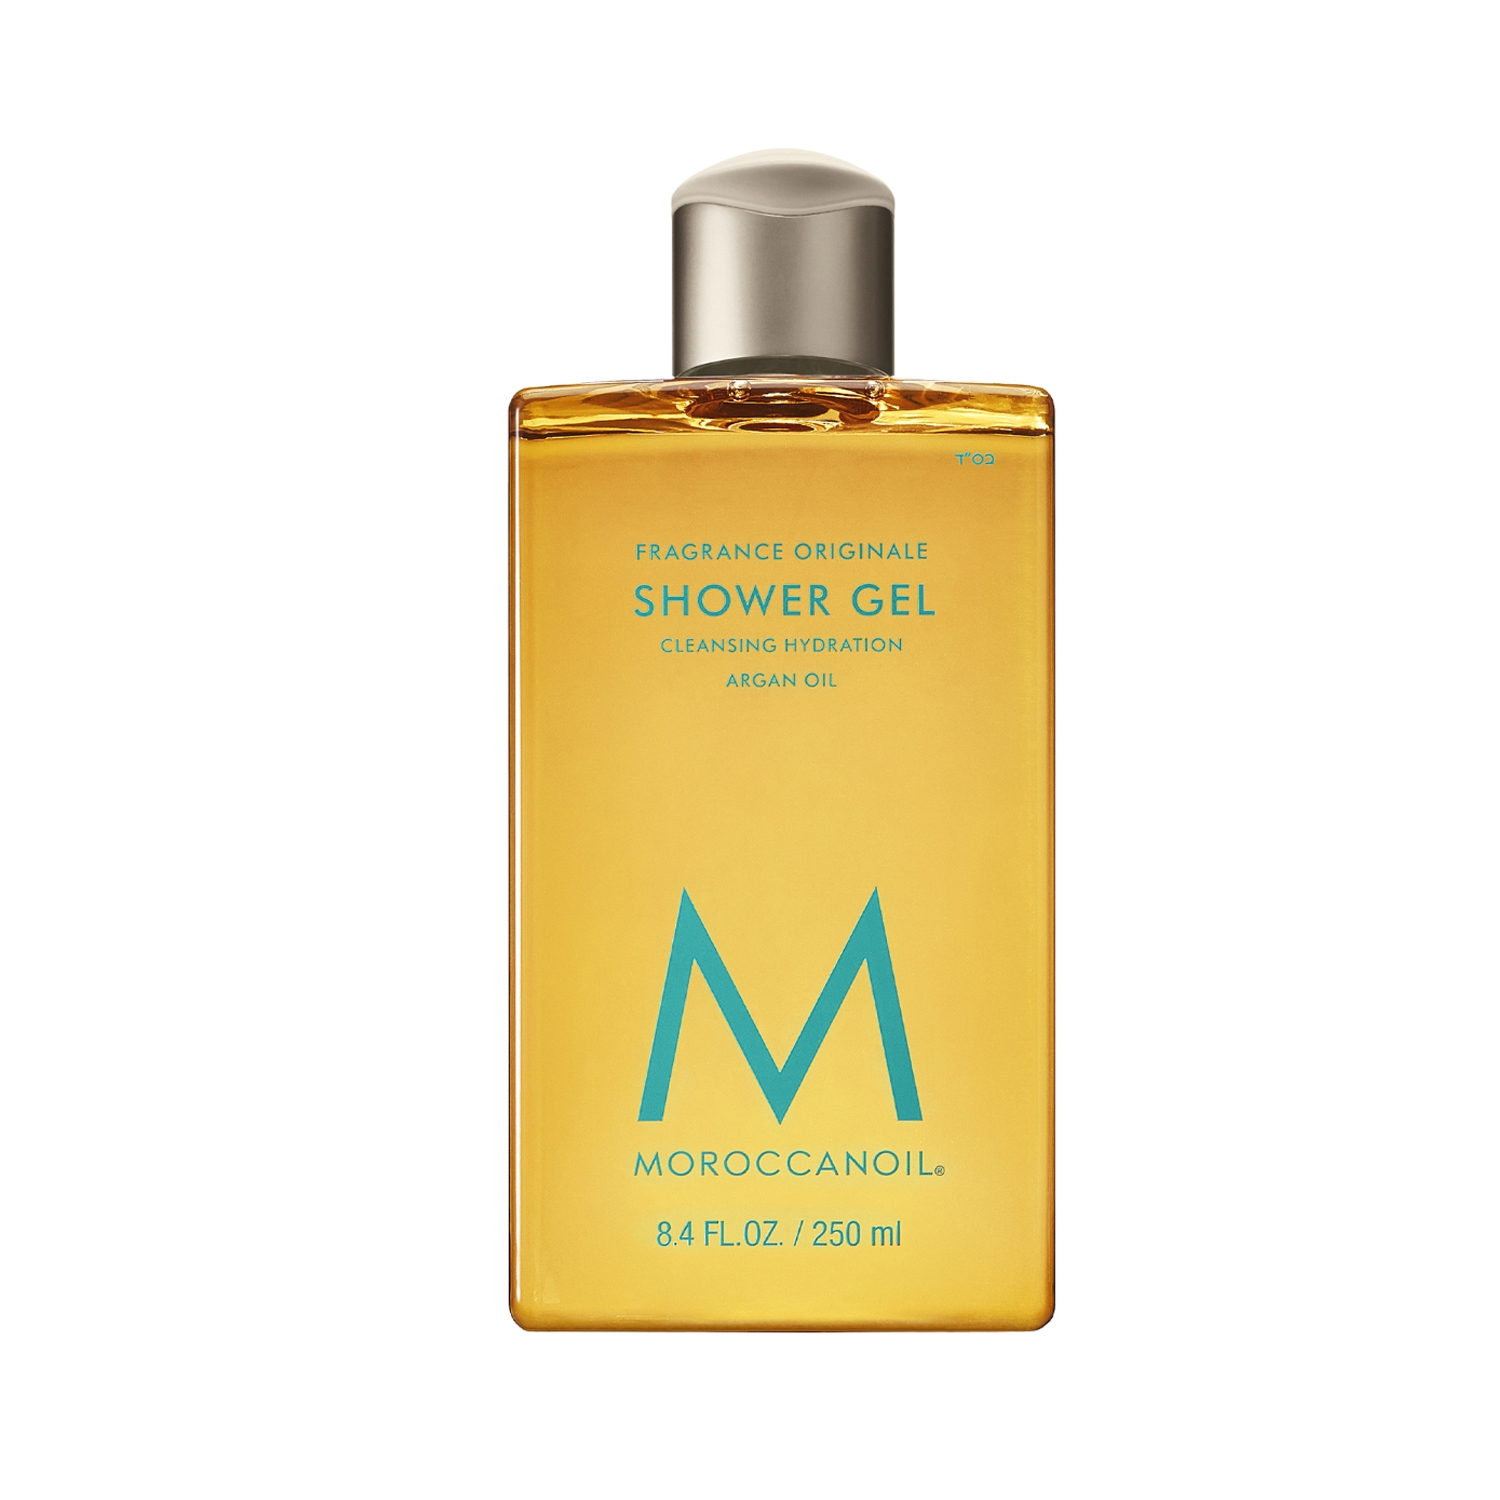 Moroccanoil | Moroccanoil Fragrance Originale Shower Gel (250ml)